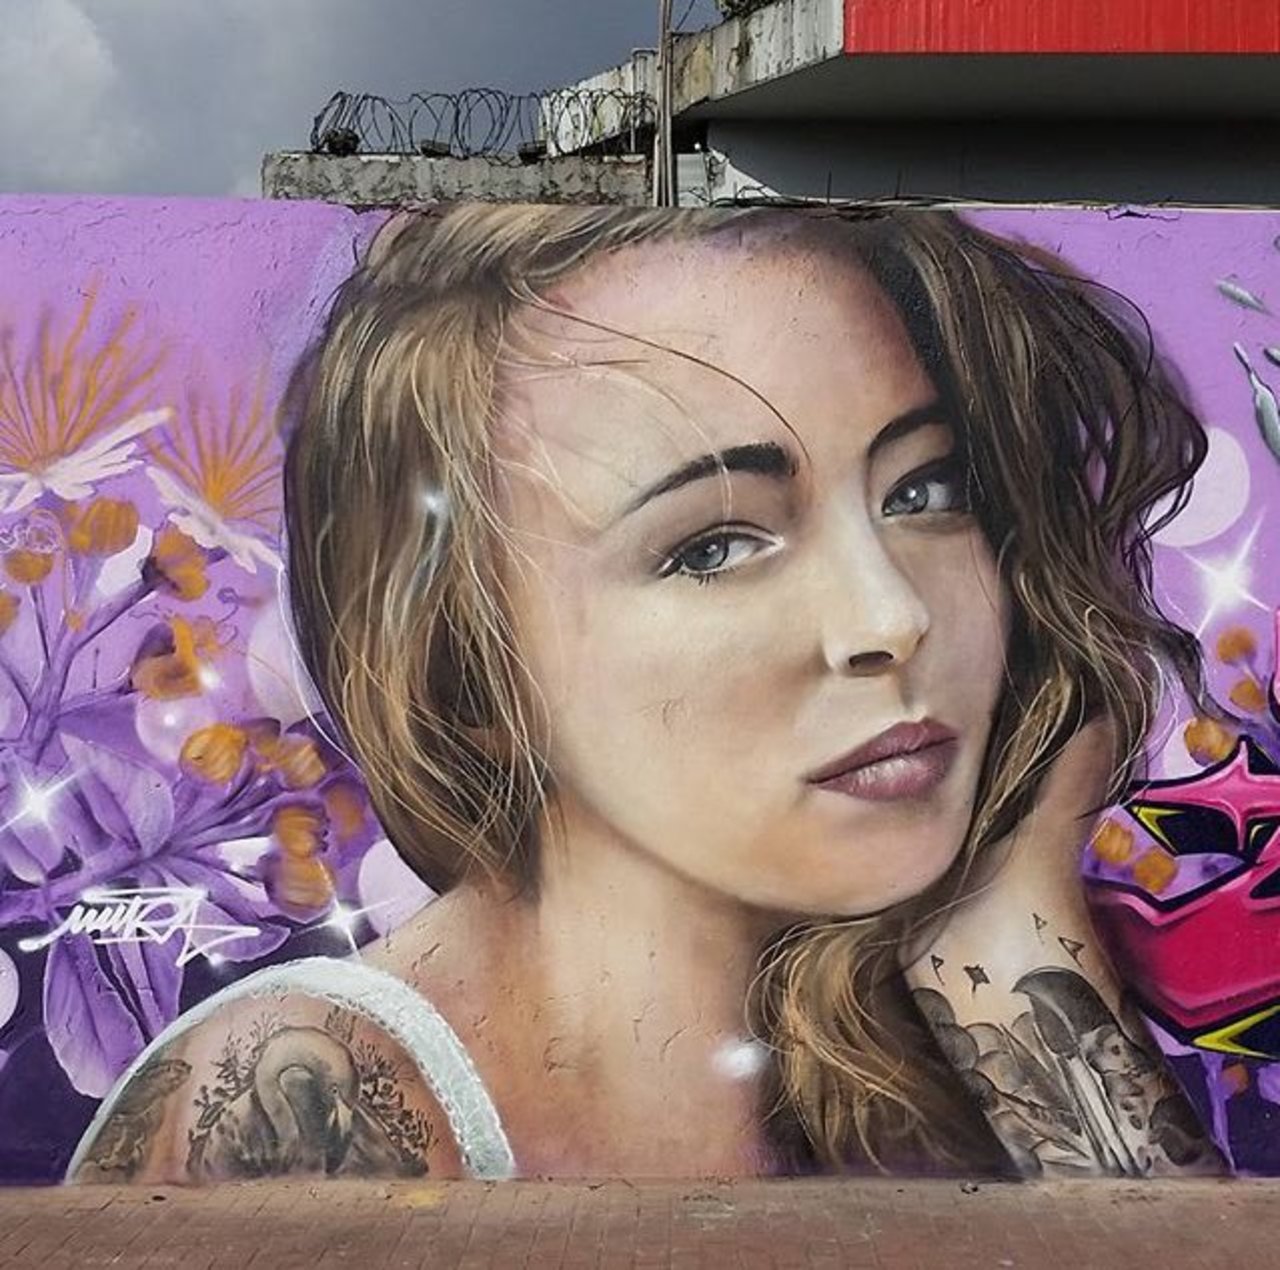 New Street Art by Mantarea 

#art #graffiti #mural #streetart https://t.co/jDJkbAT7Rj